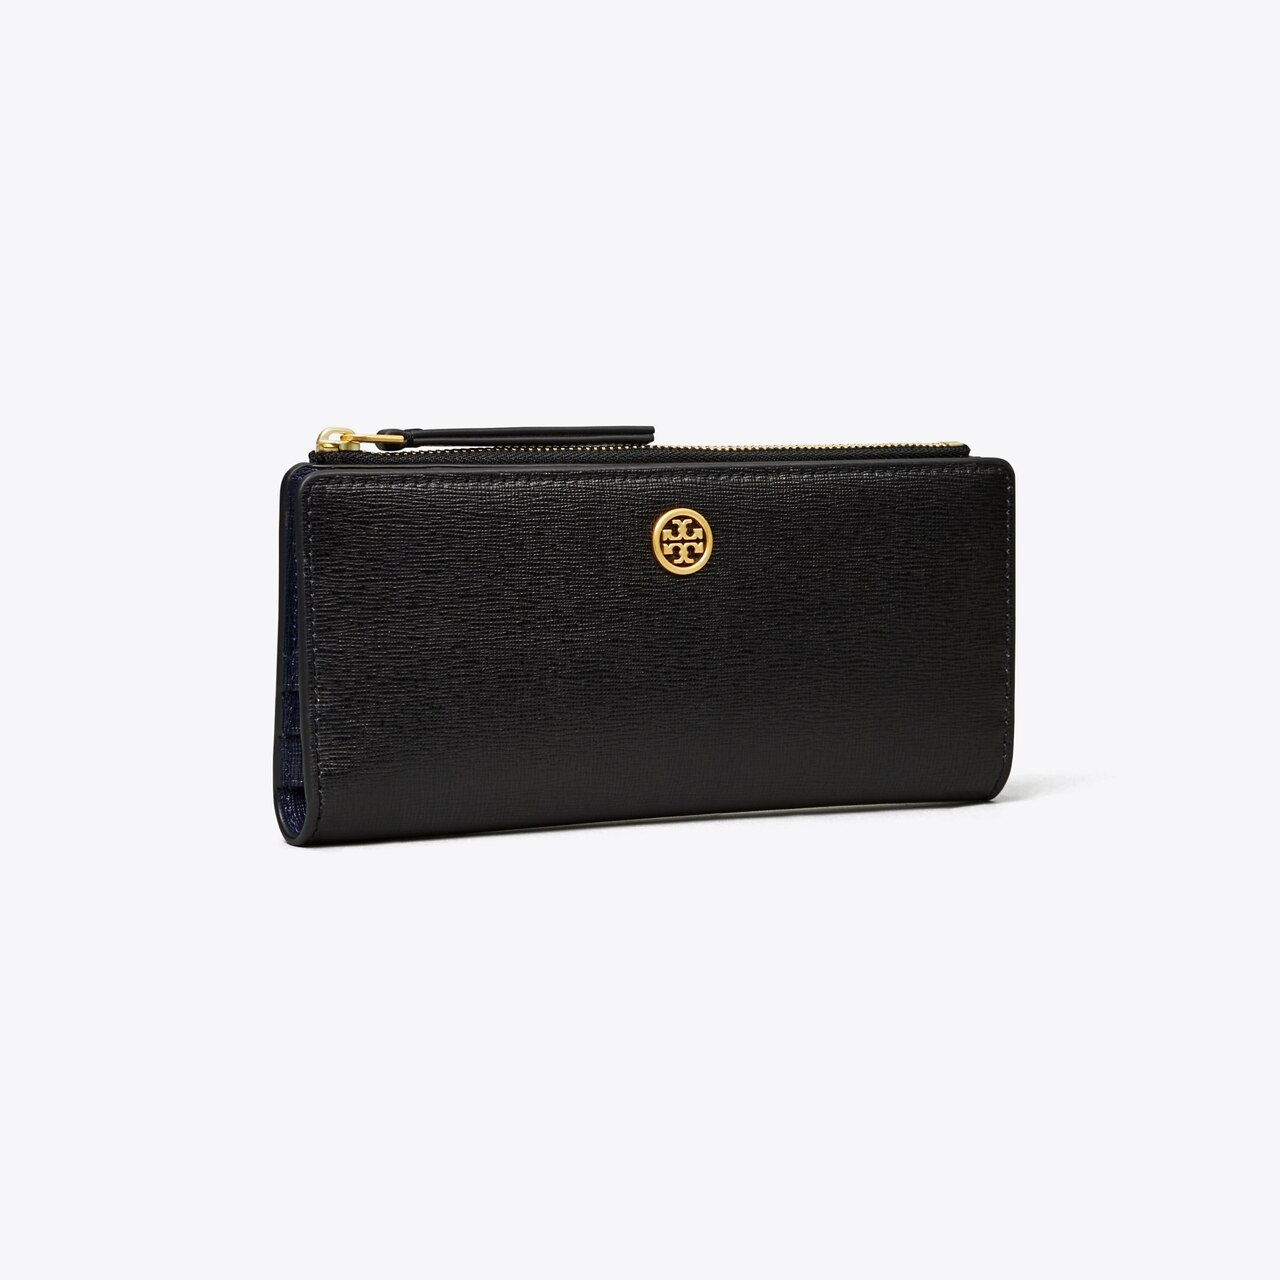 Tory Burch Women's T Monogram Zip Slim Wallet in Black, One Size